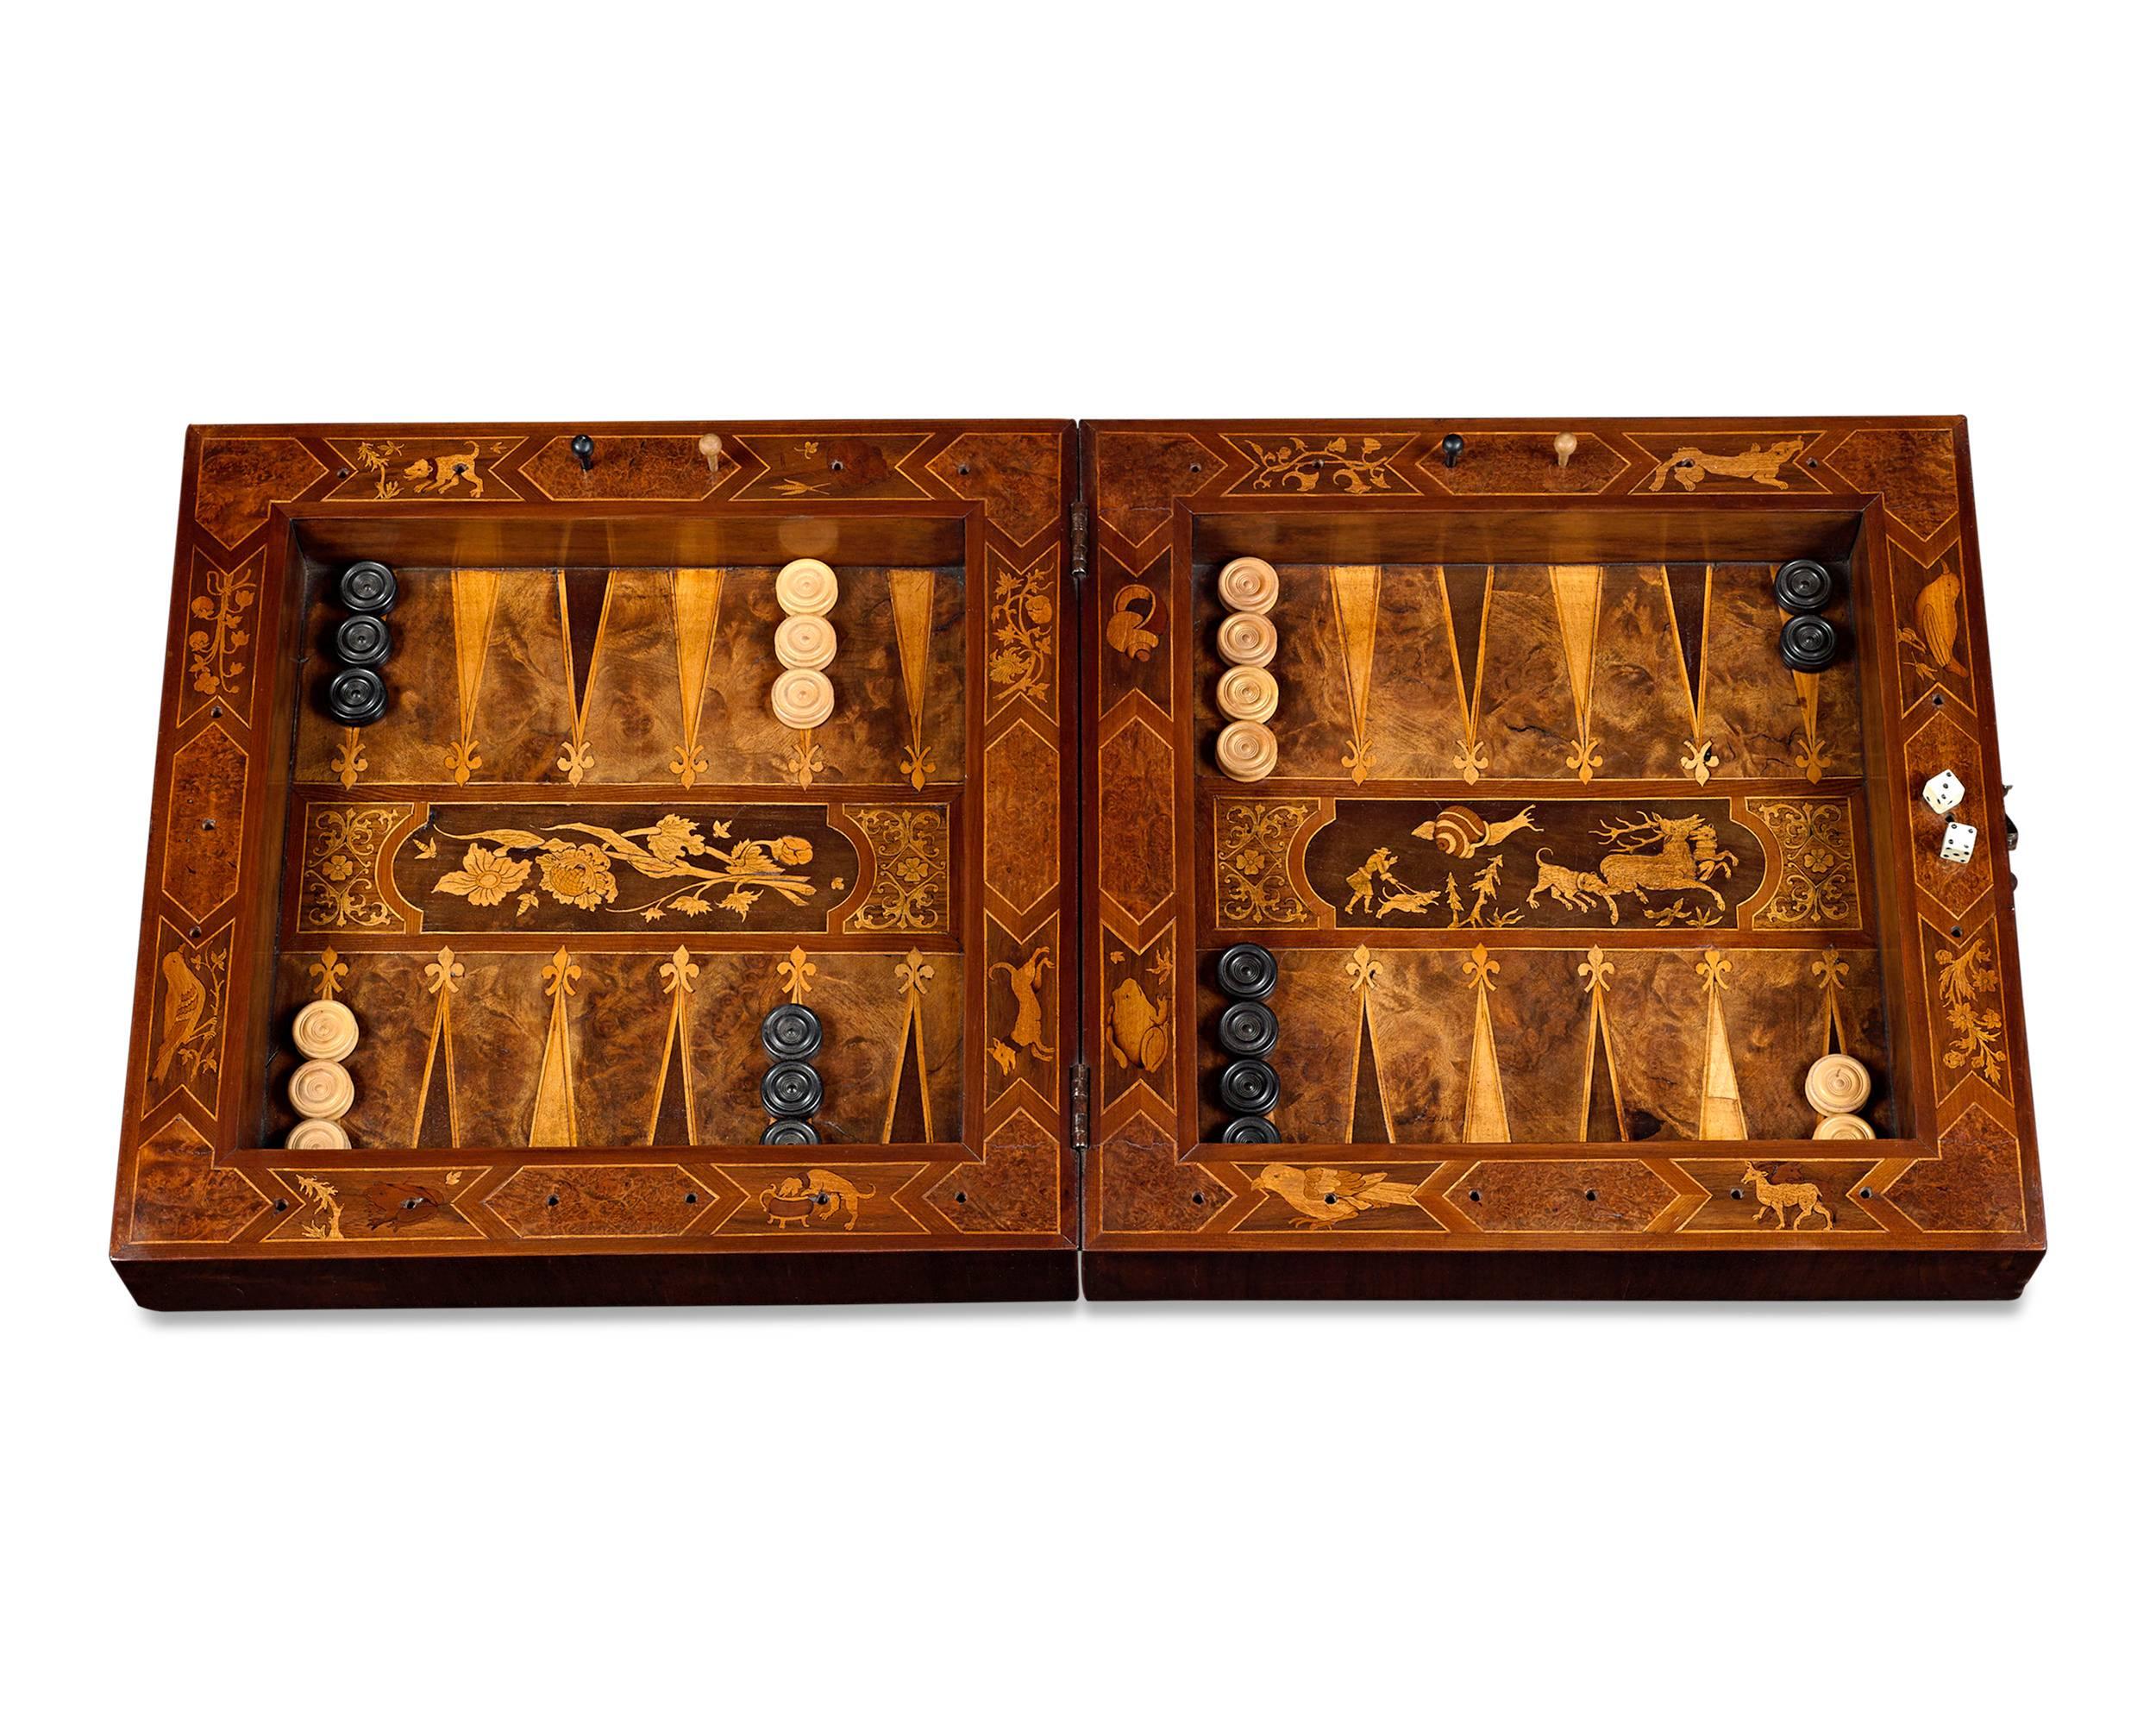 17th century games